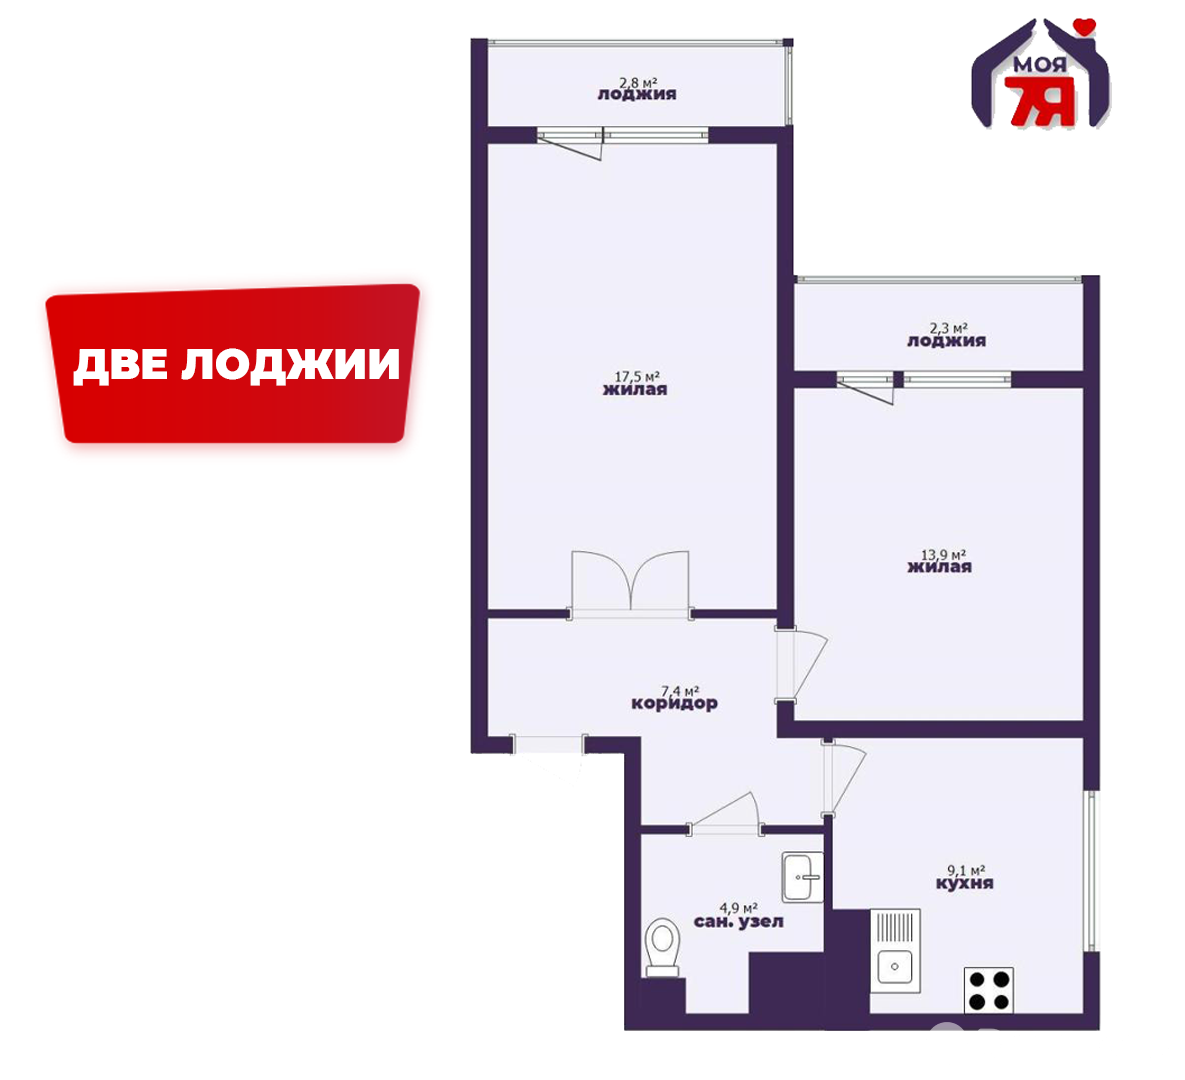 квартира, Минск, ул. Асаналиева, д. 66, стоимость продажи 237 148 р.